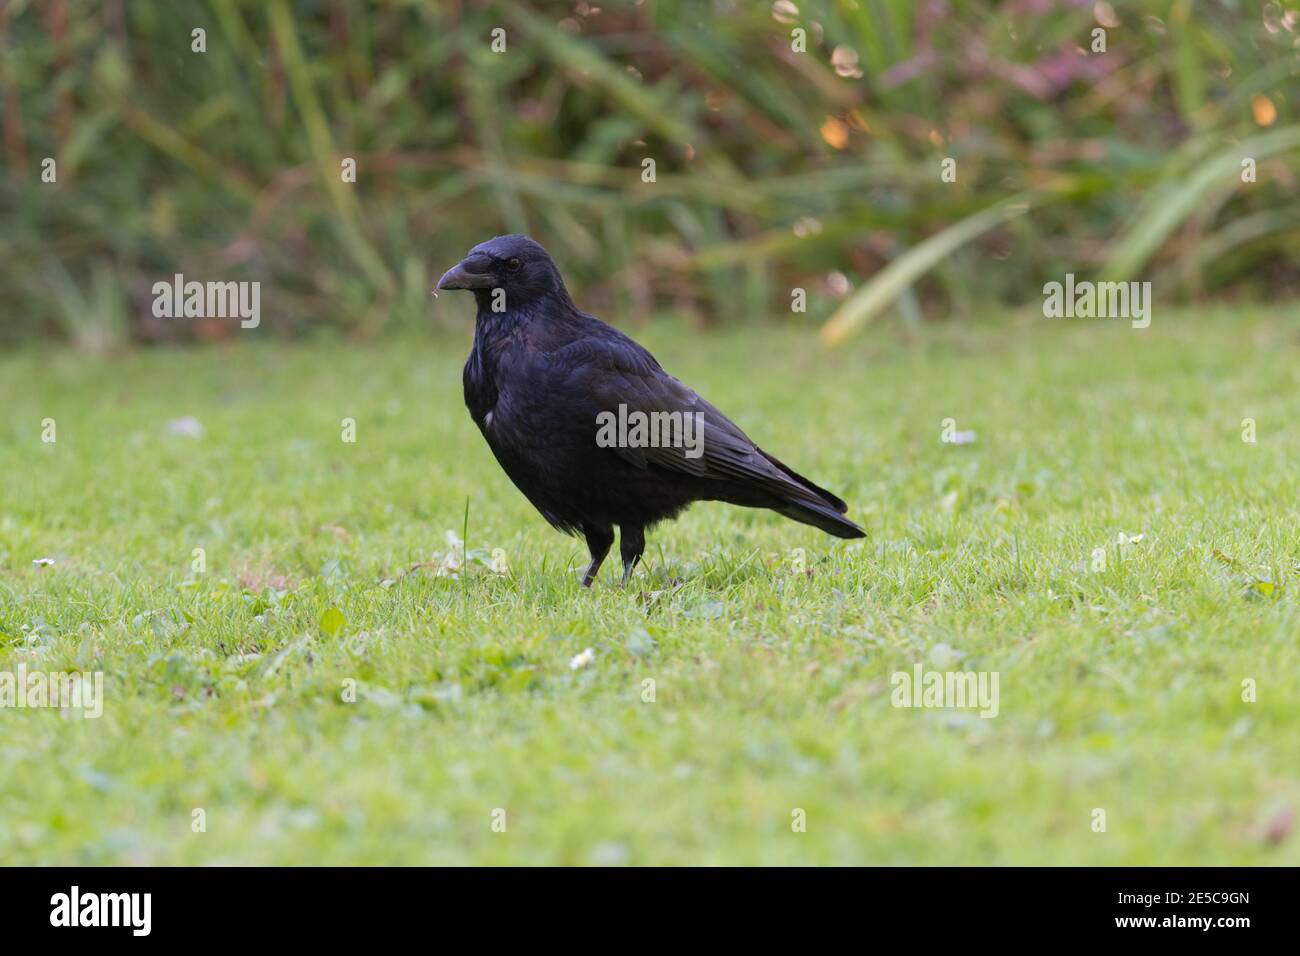 European Crow (Corvus brachyrhynchos) sitting in the grass on the ground Stock Photo